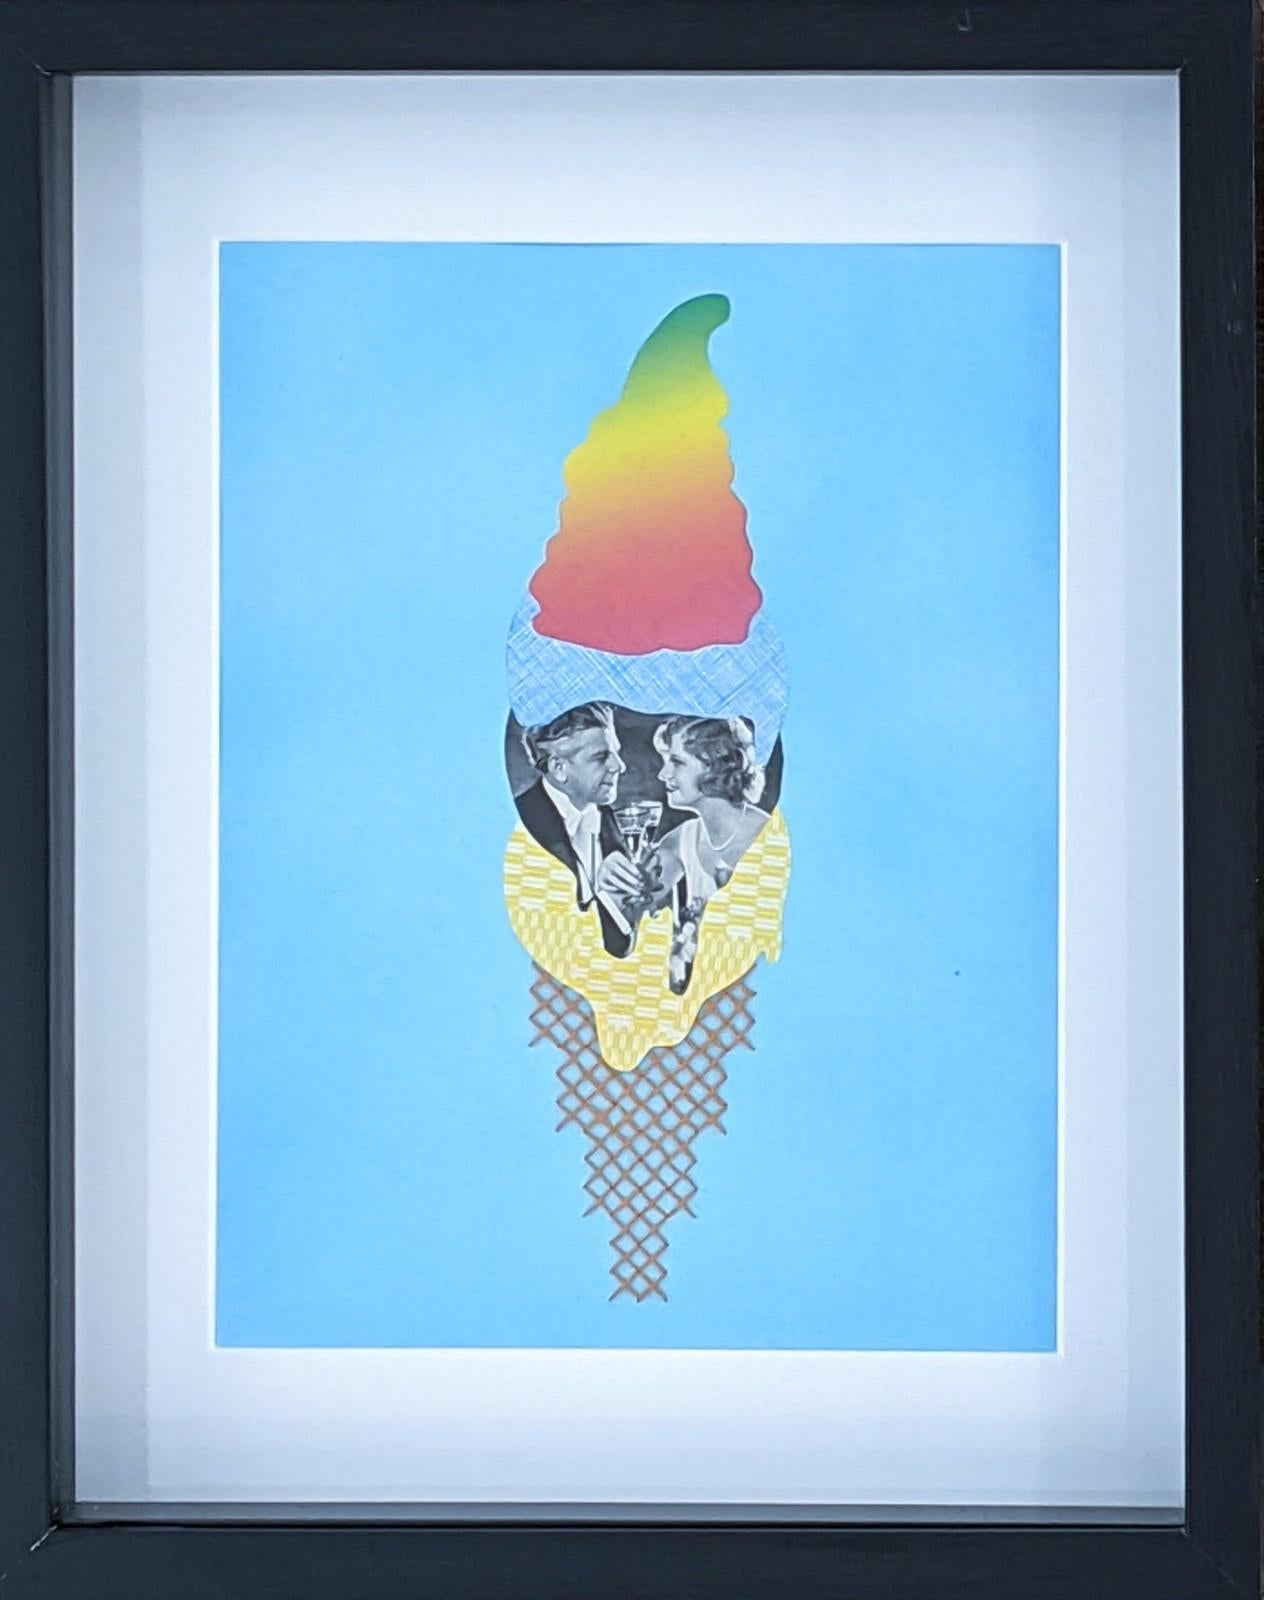 Lemondrop Love - Collage of Film Noir Couple as an Ice Cream Cone (Blue +Yellow)